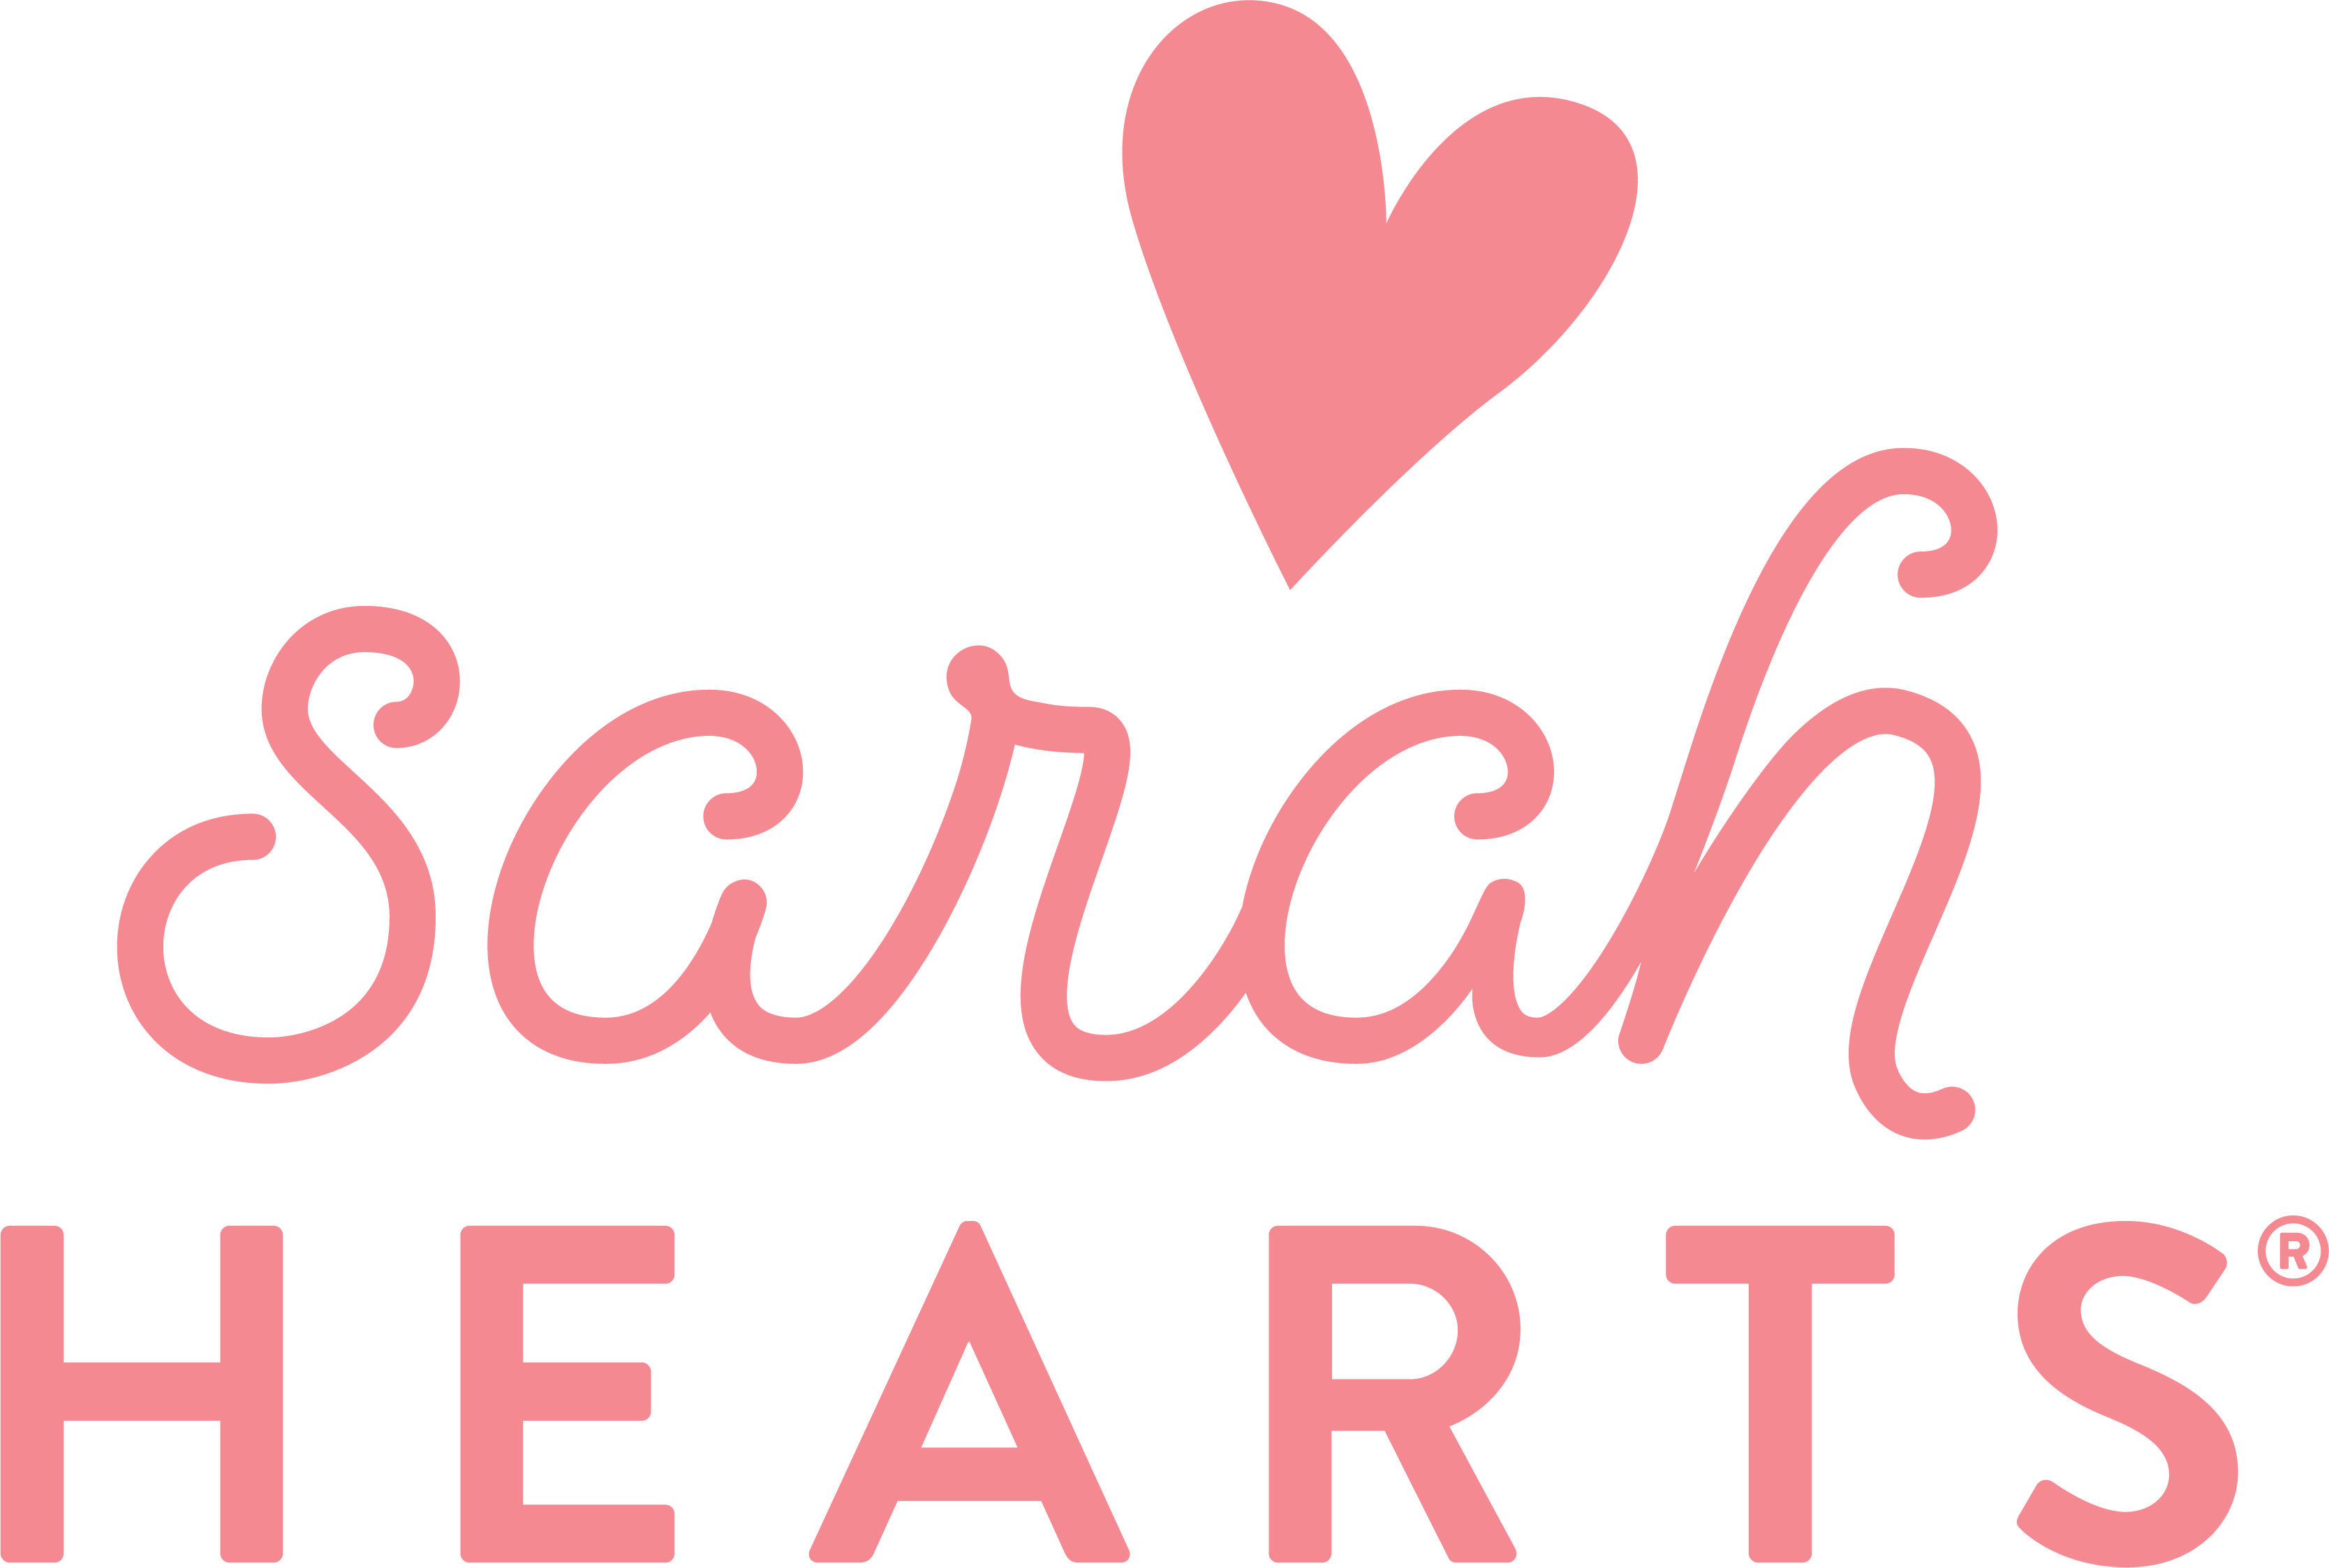 Printable Freezer Labels and Recipes - Sarah Hearts